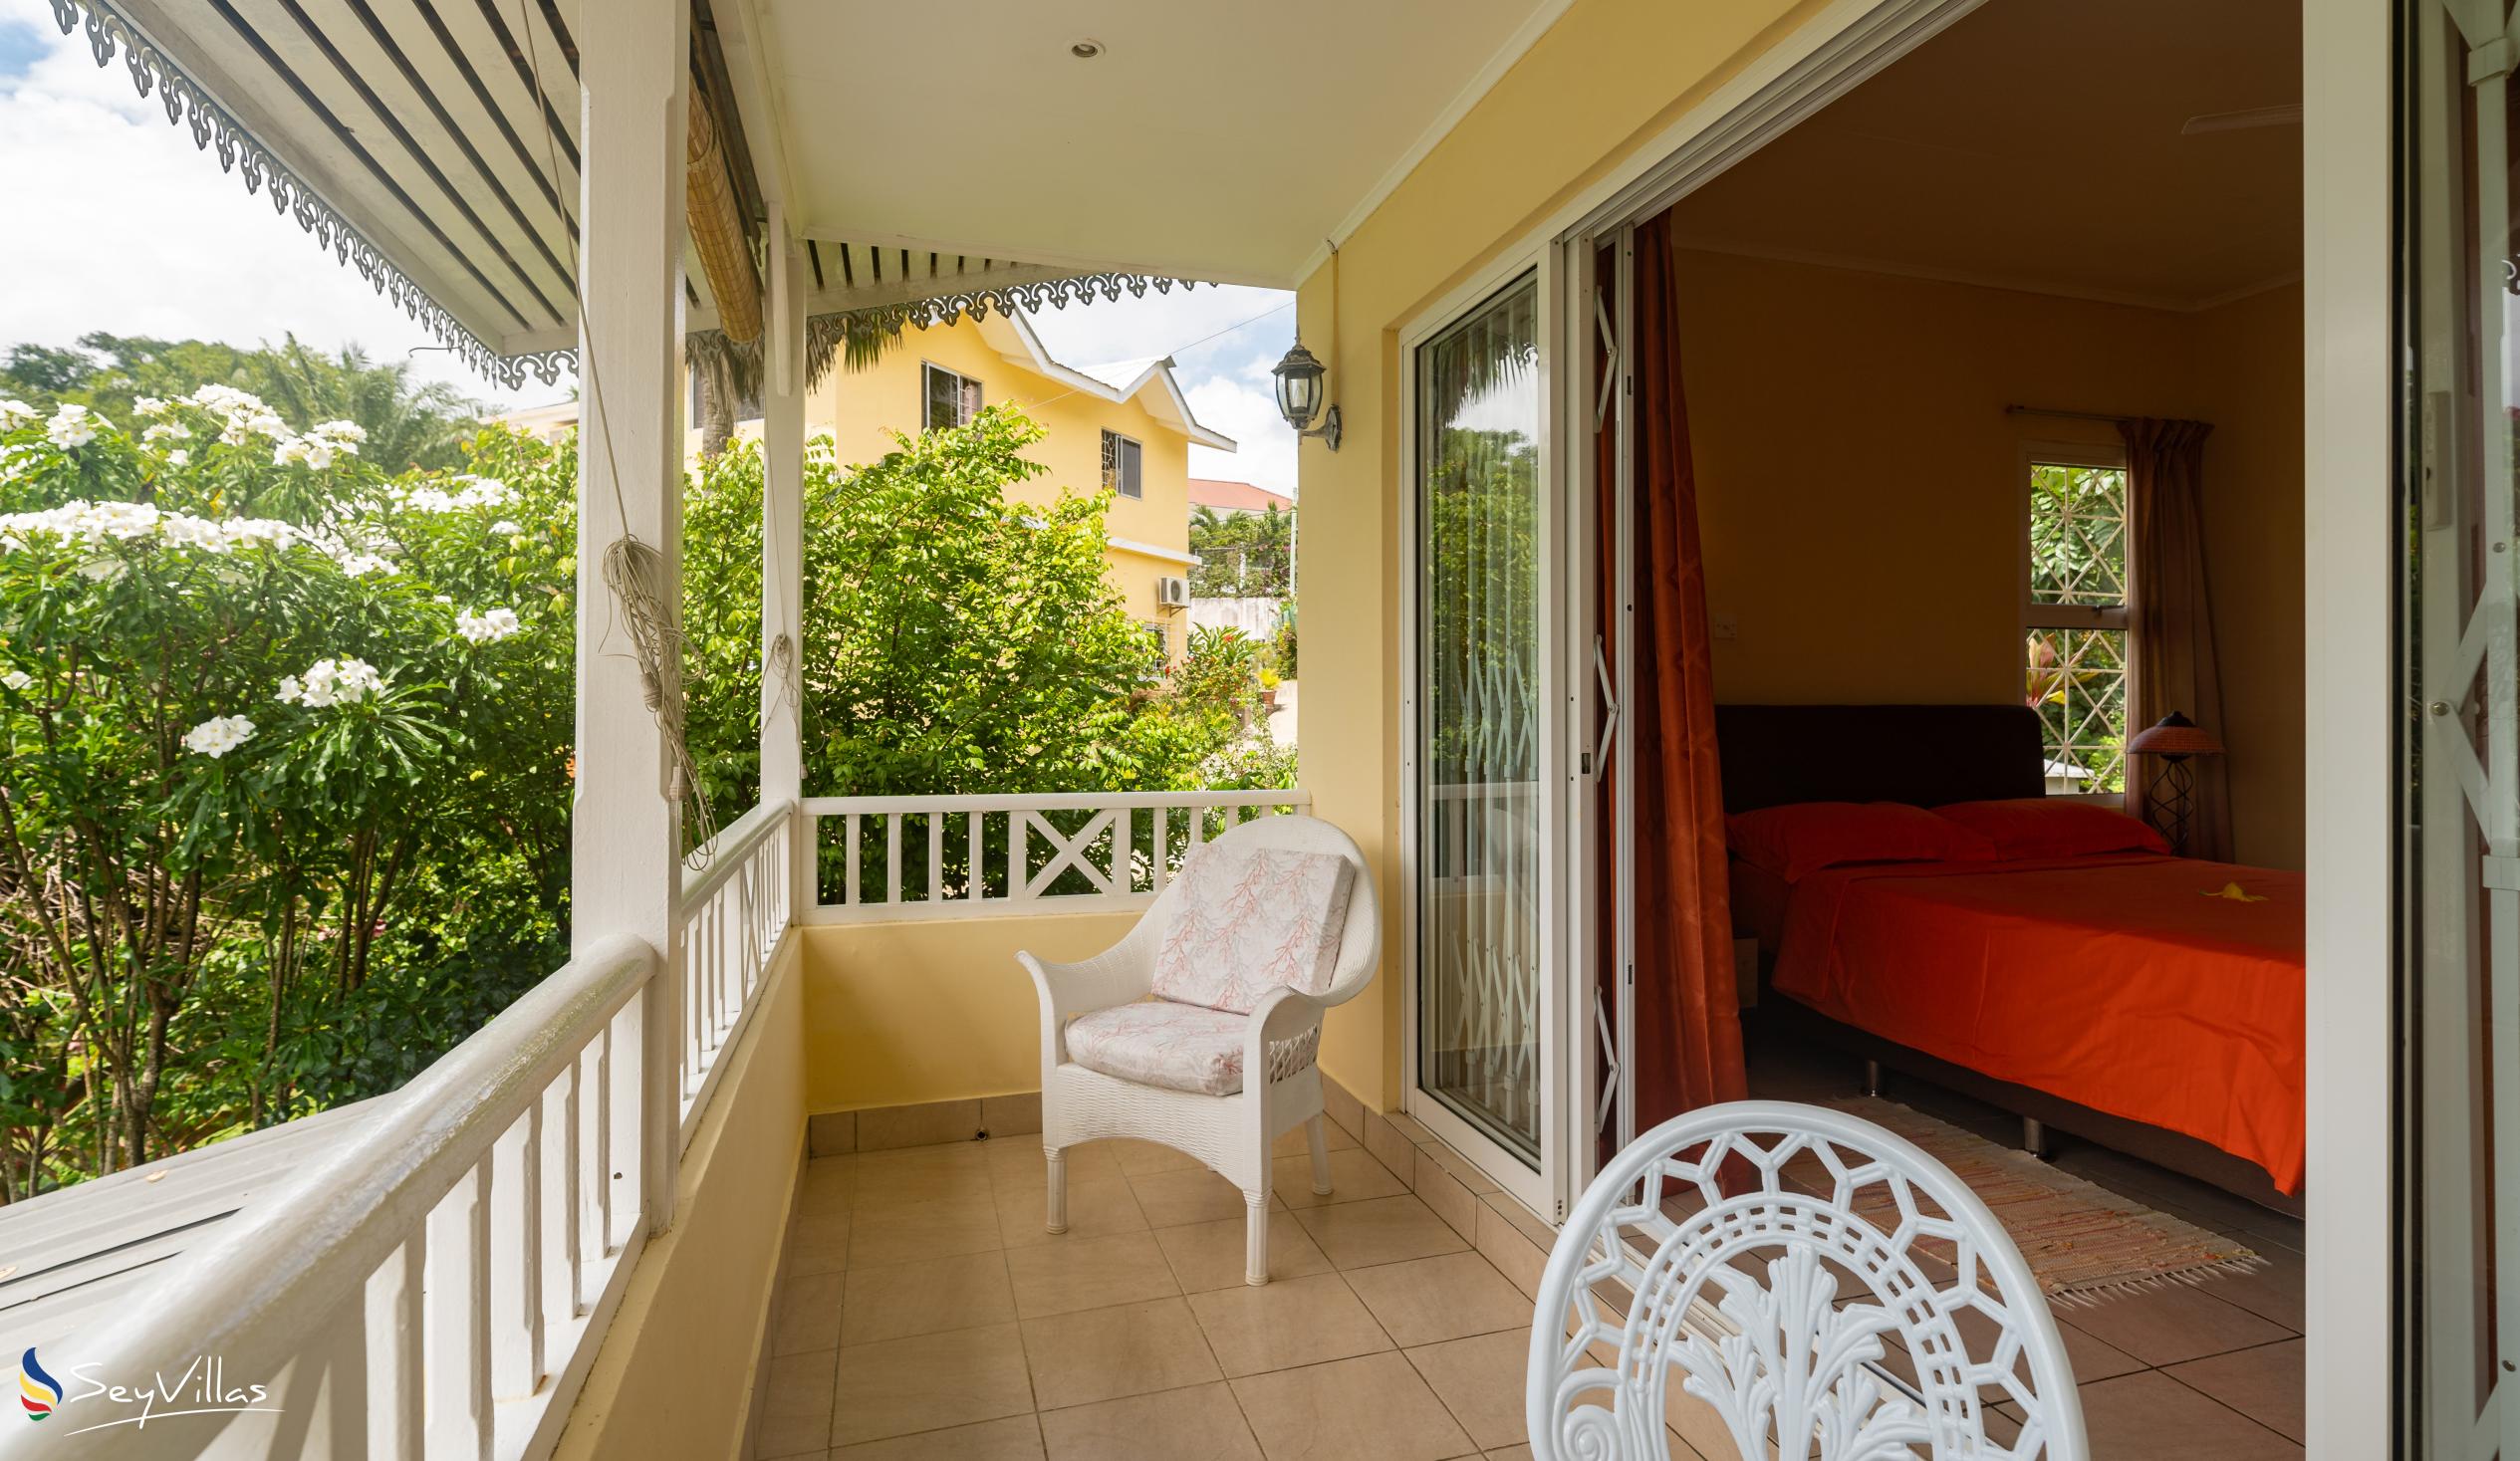 Photo 95: Residence Monte Cristo - 3-Bedroom Duplex - Mahé (Seychelles)